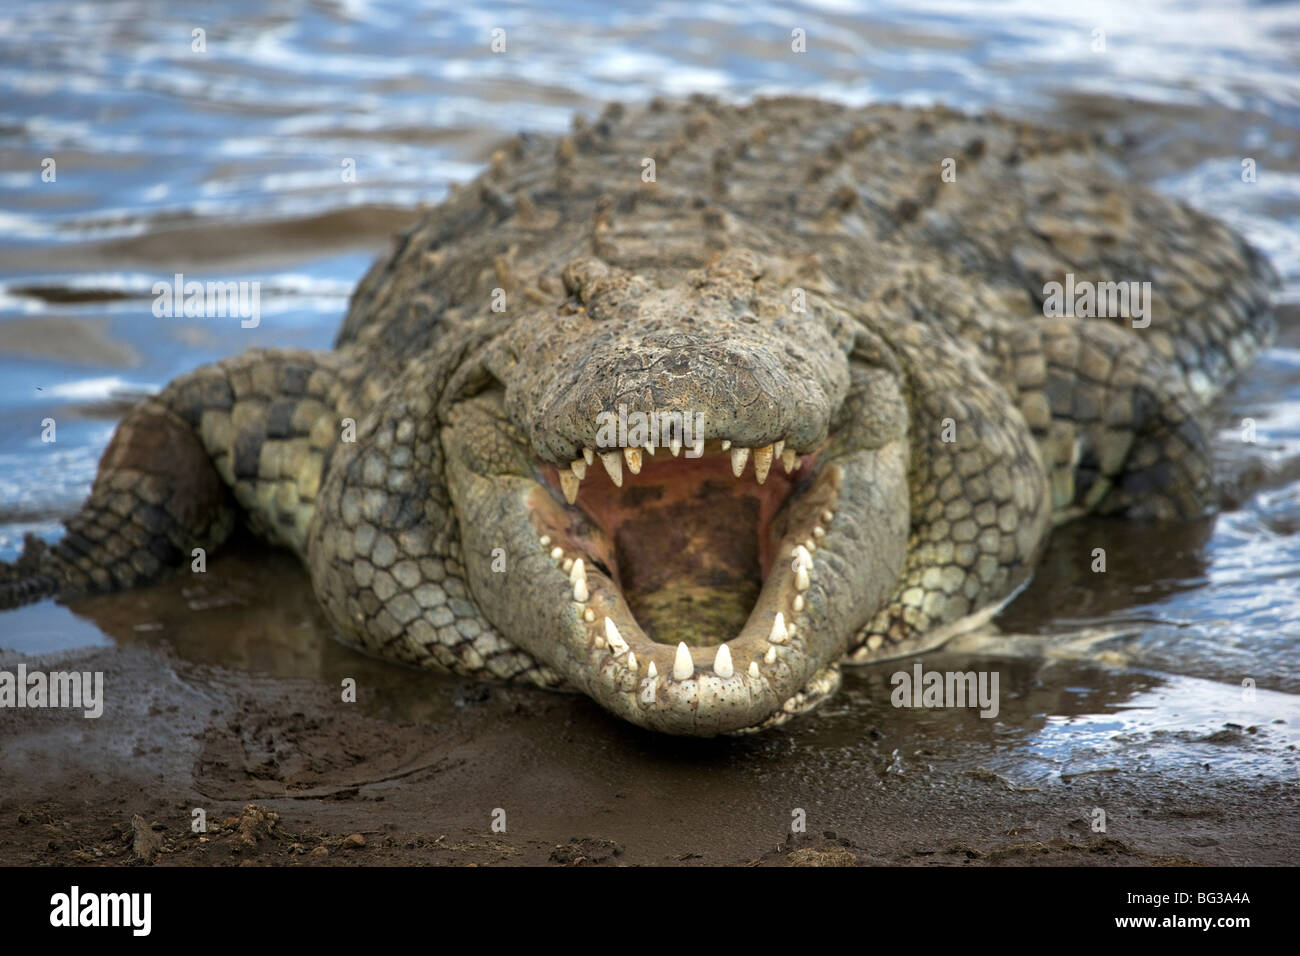 Nile crocodile (Crocodylus niliticus) on shore of Mara River with open jaws, Masai Mara National Reserve, Kenya, East Africa Stock Photo